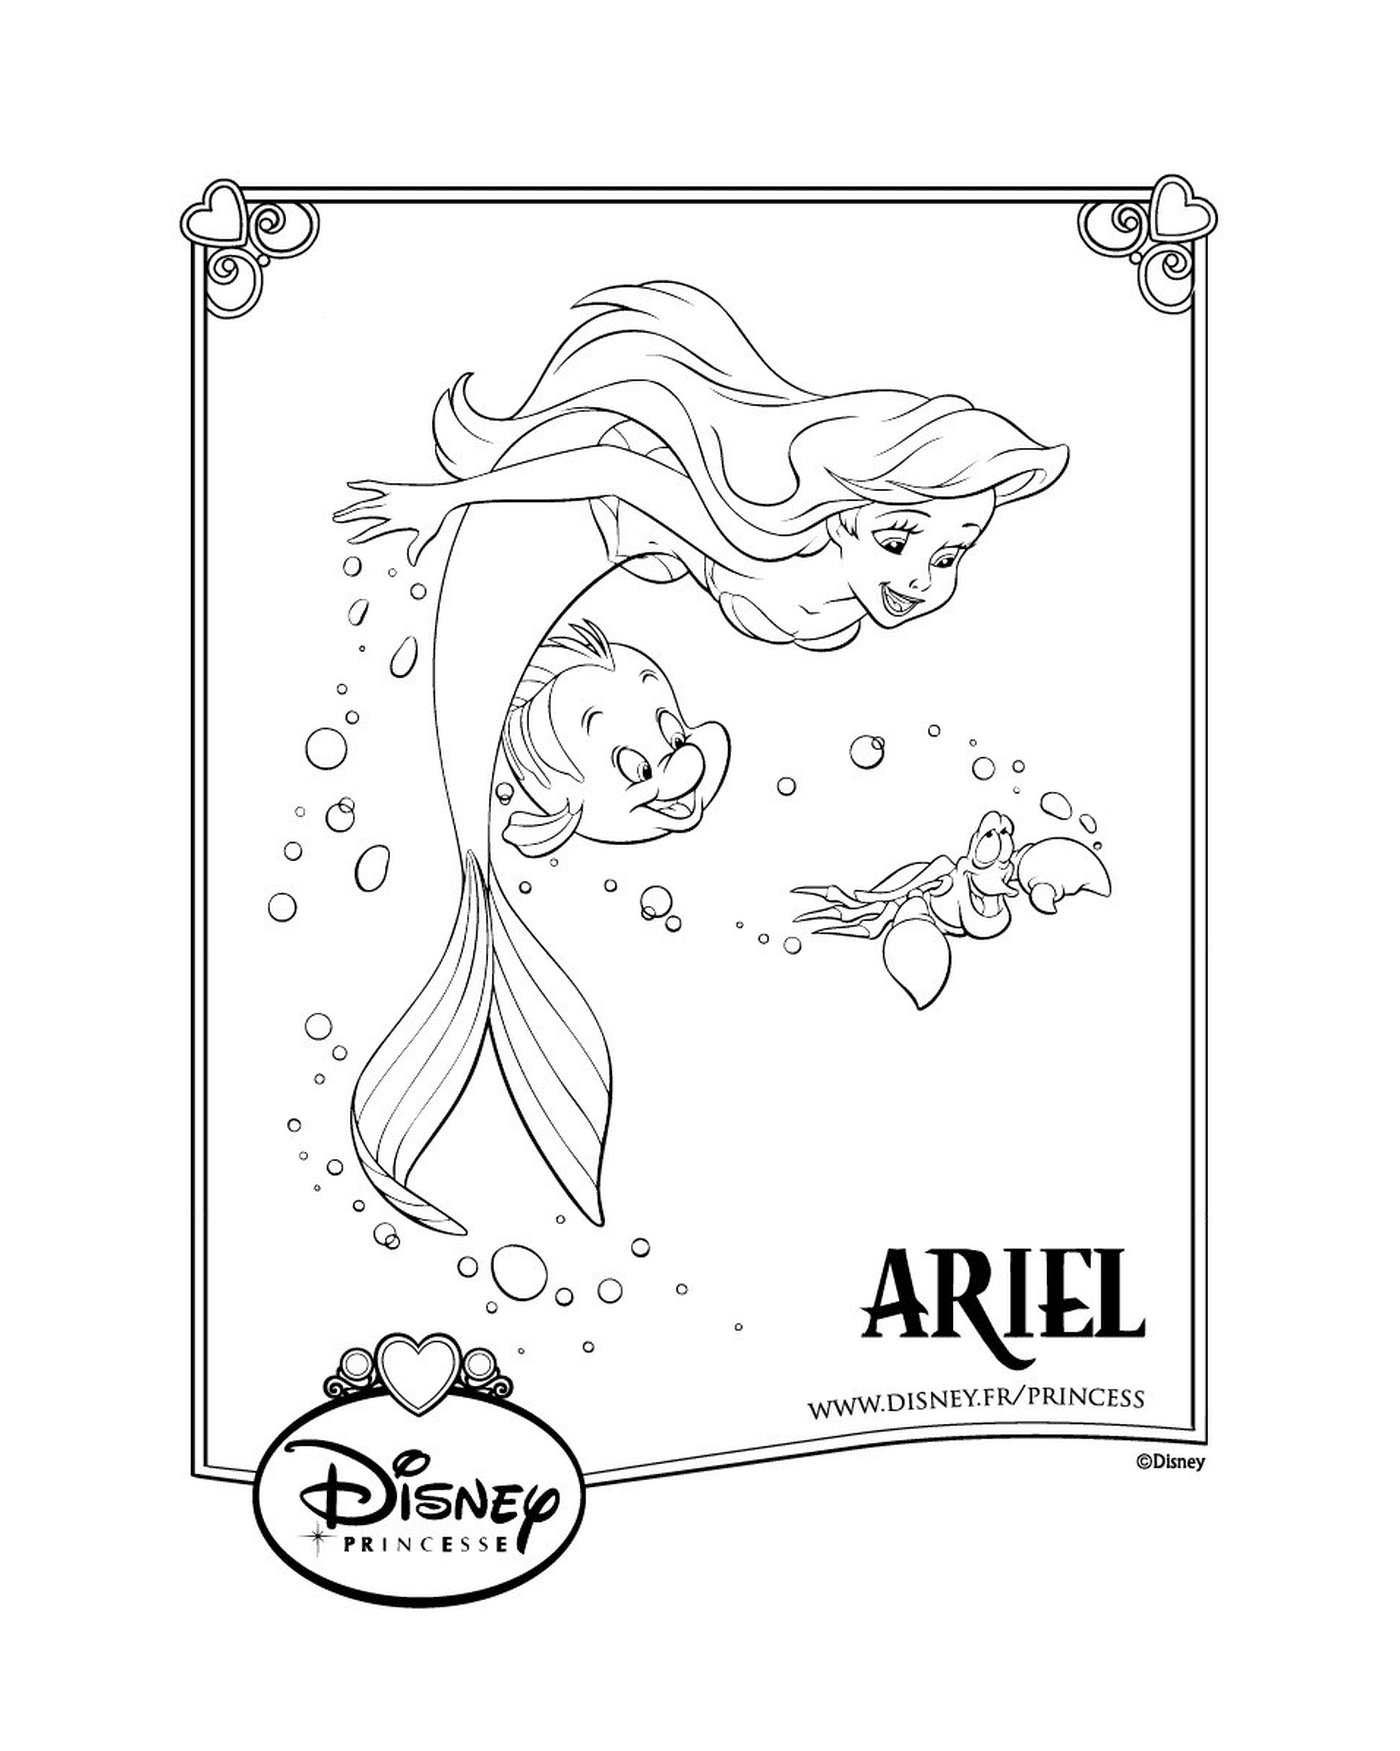  Ariel, Disney's little mermaid, princess 